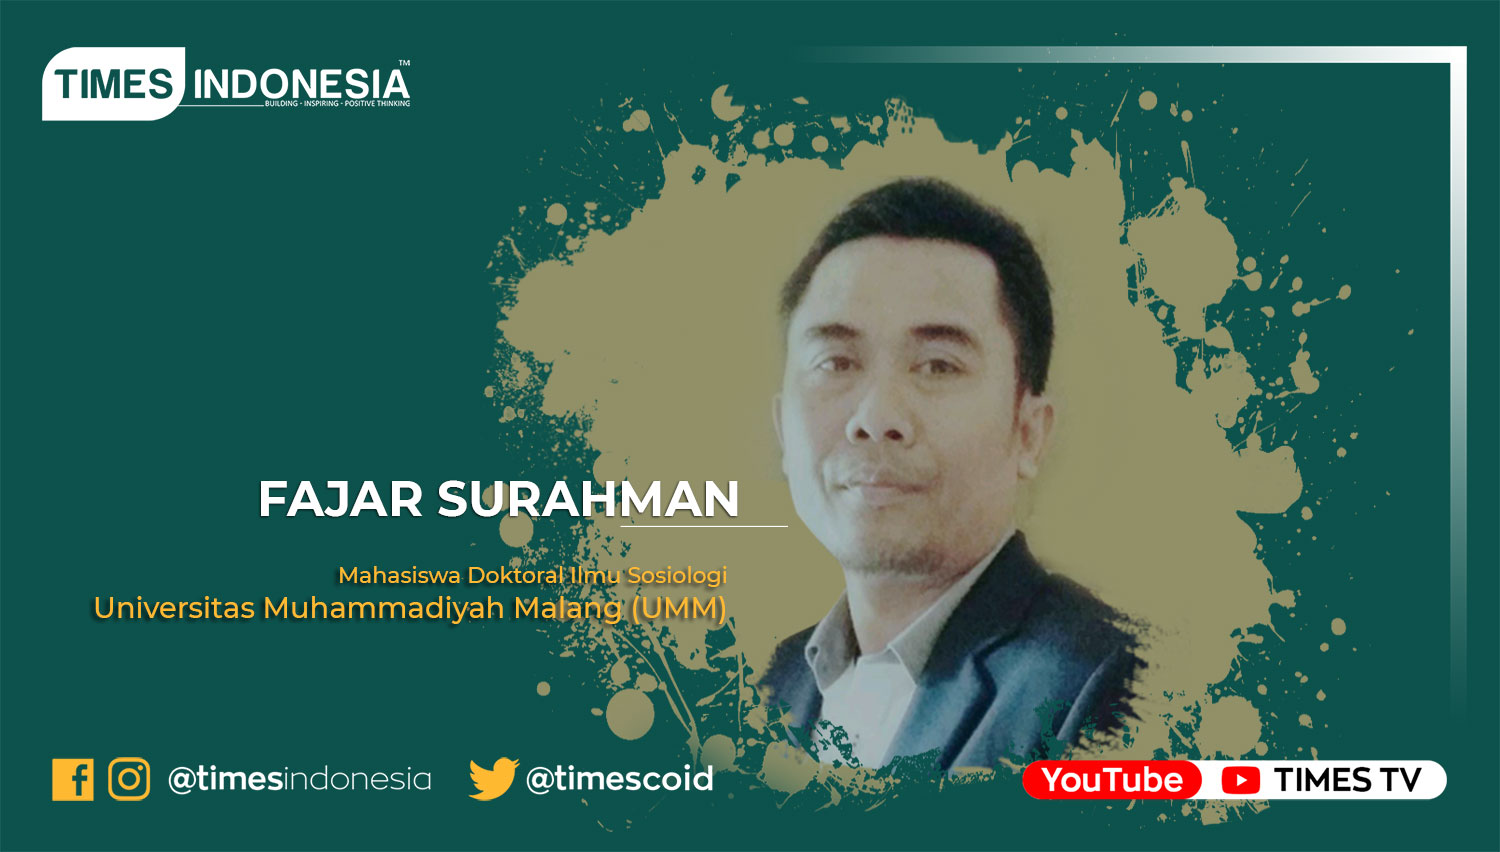 Fajar Surahman, Mahasiswa Doktoral Ilmu Sosiologi Universitas Muhammadiyah Malang (UMM)